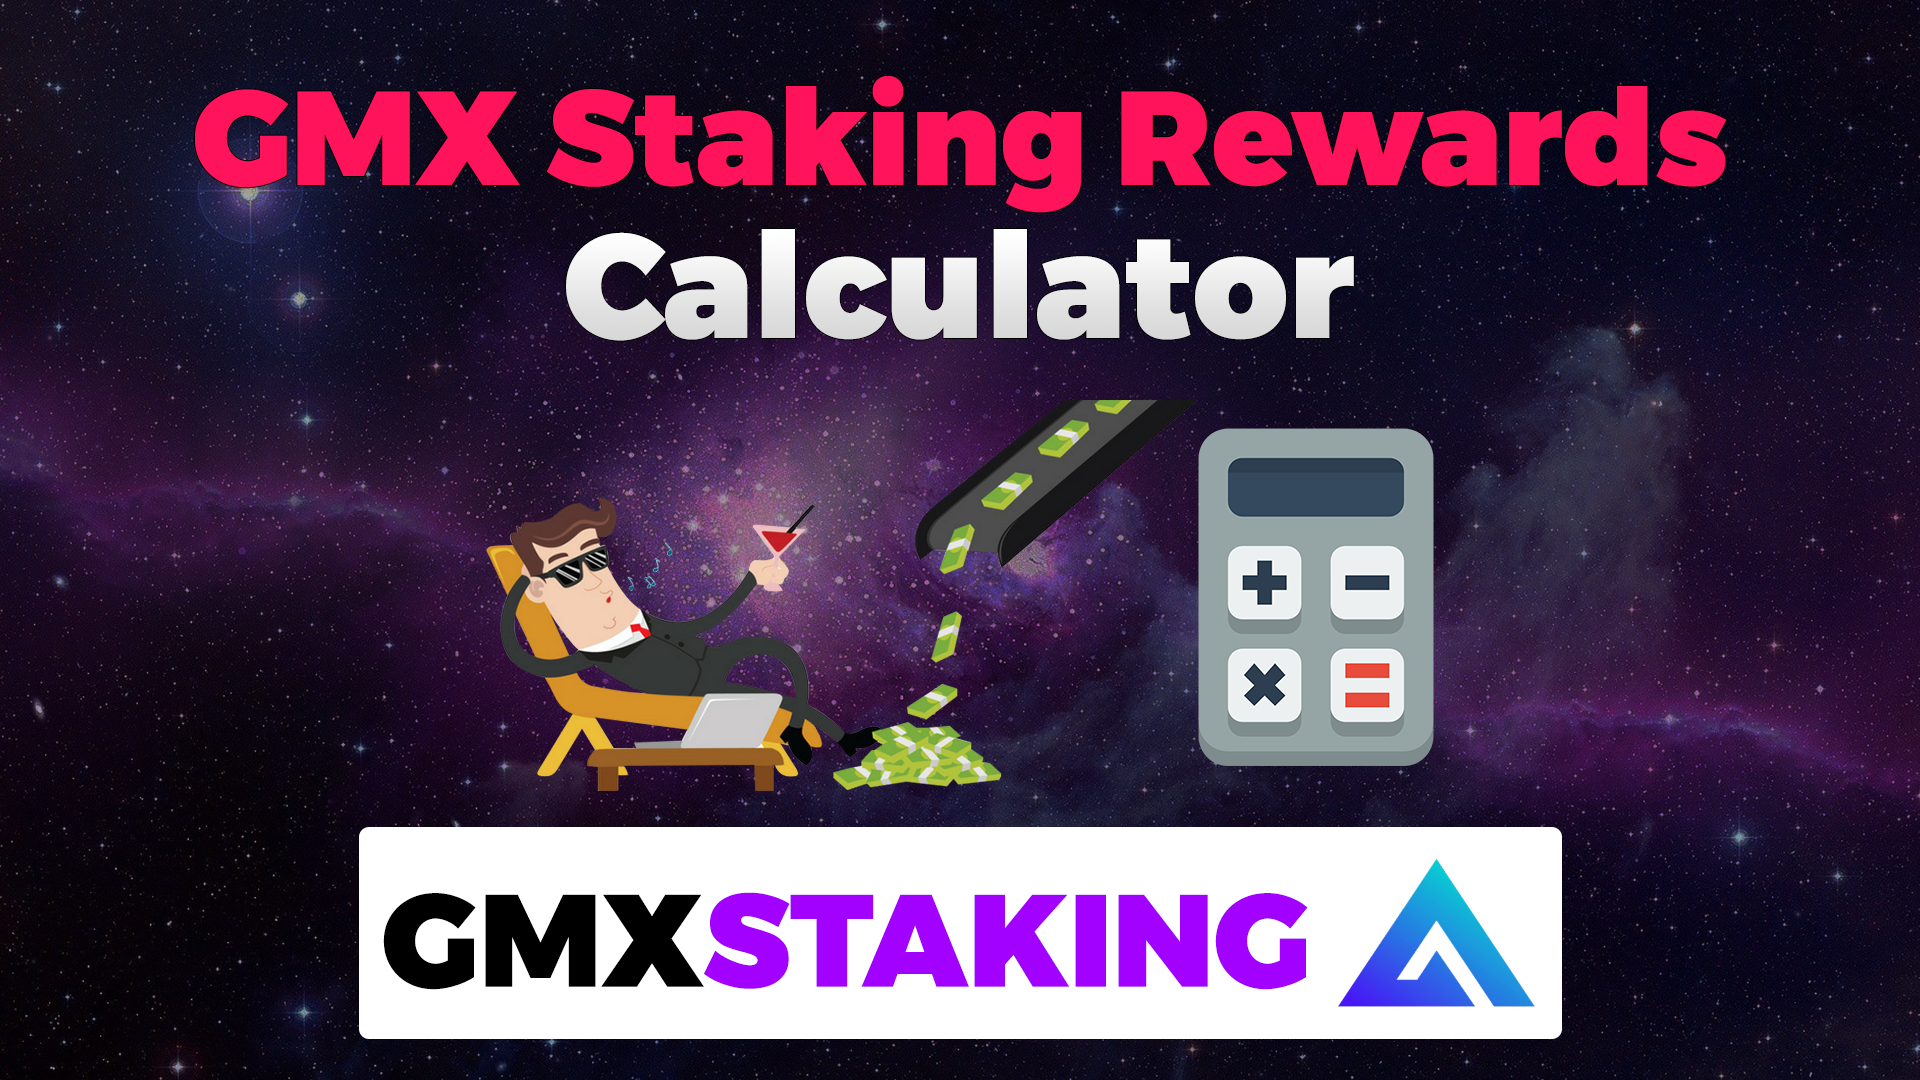 GMX Staking Rewards Calculator